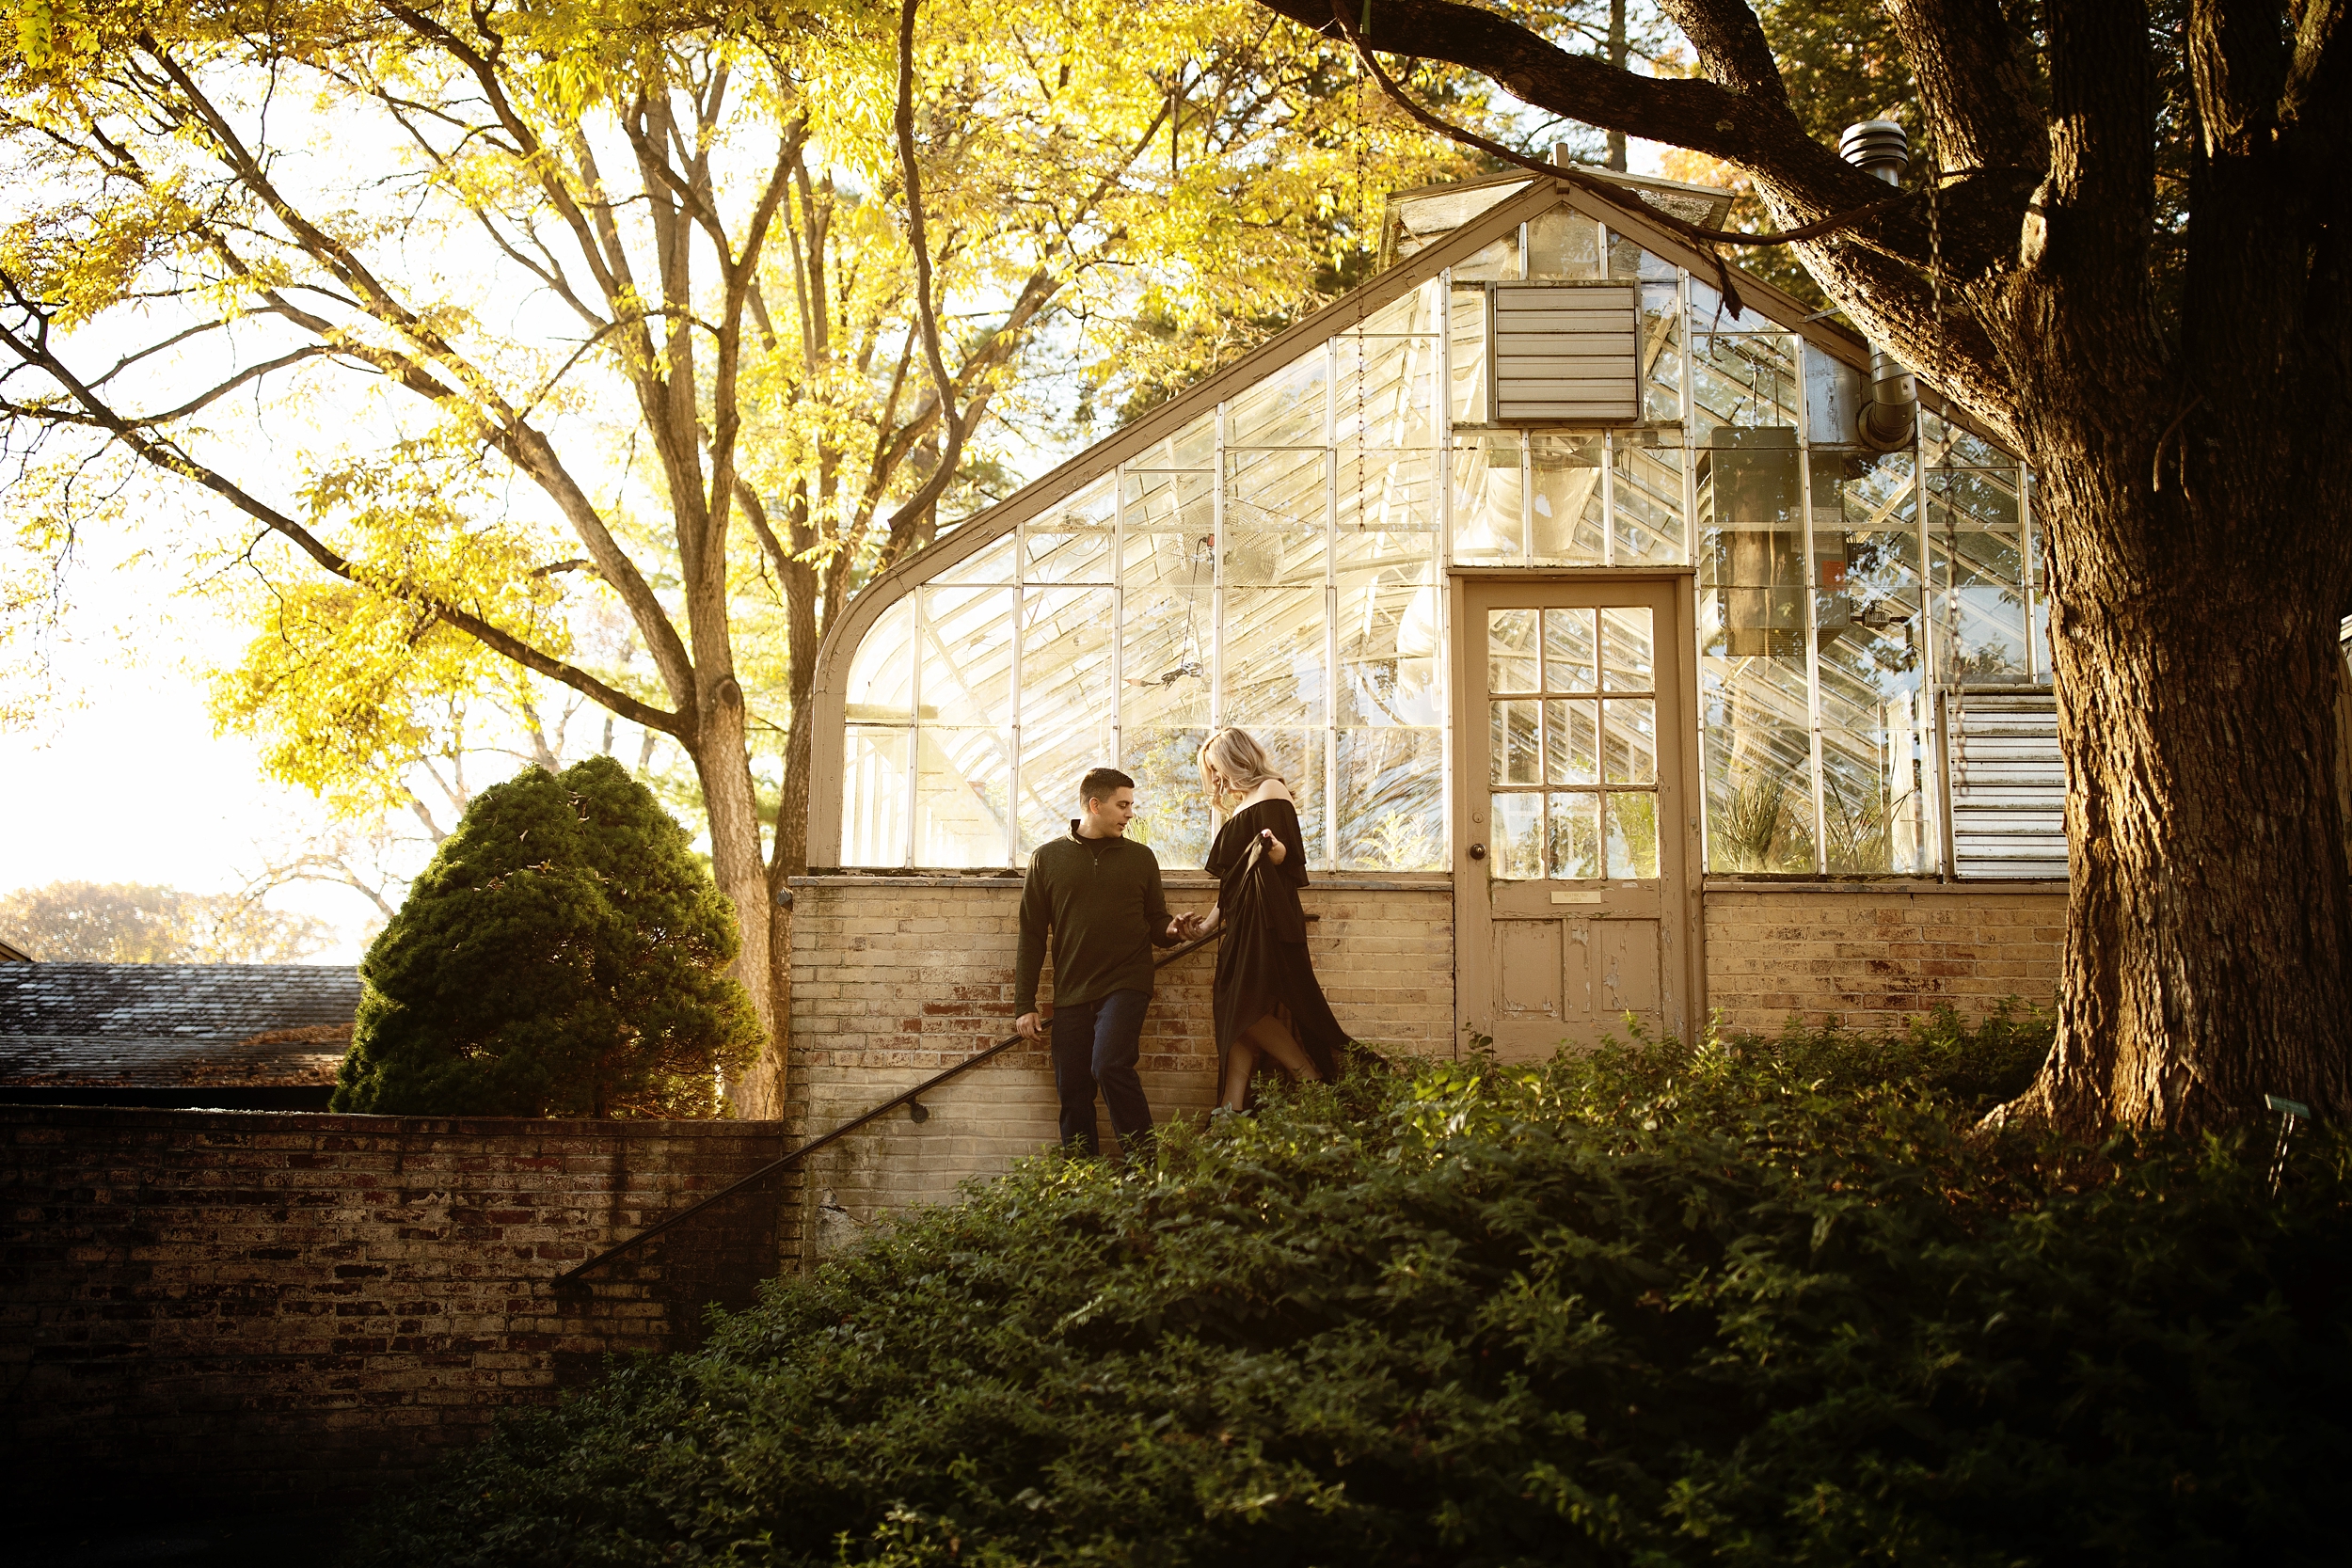 Conestoga House and Gardens Romantic Fall Engagement Photos.